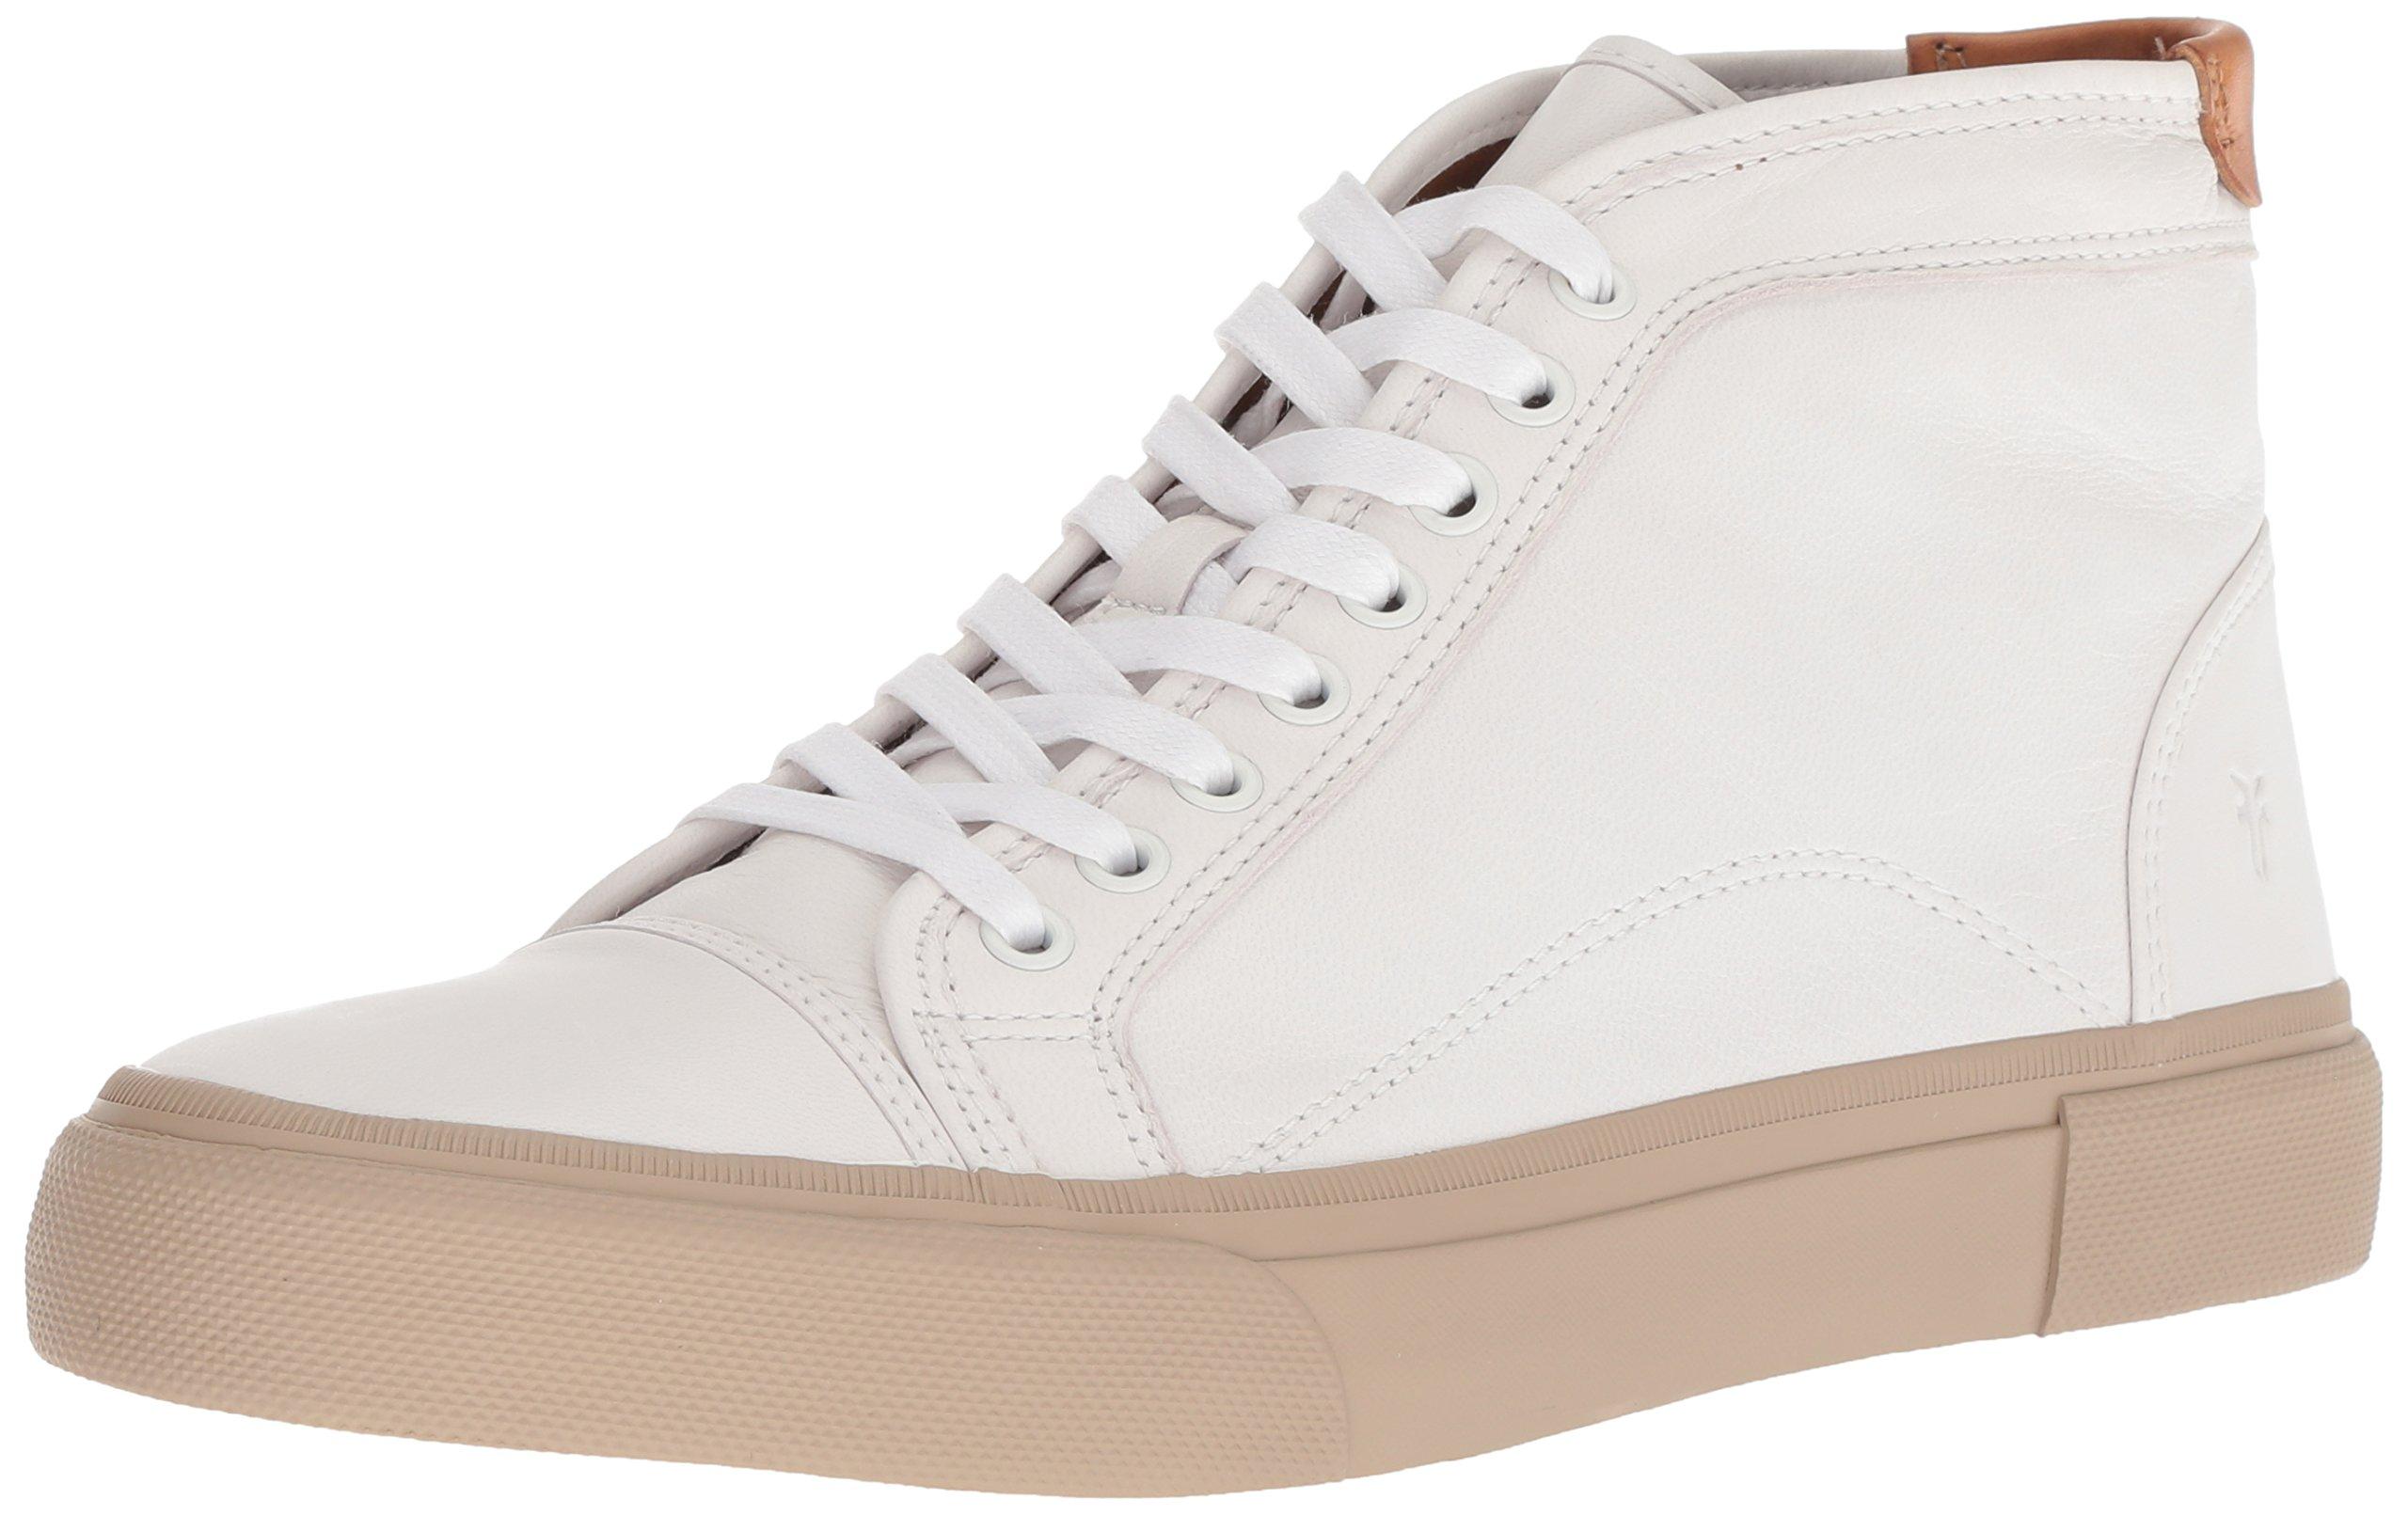 frye white sneakers